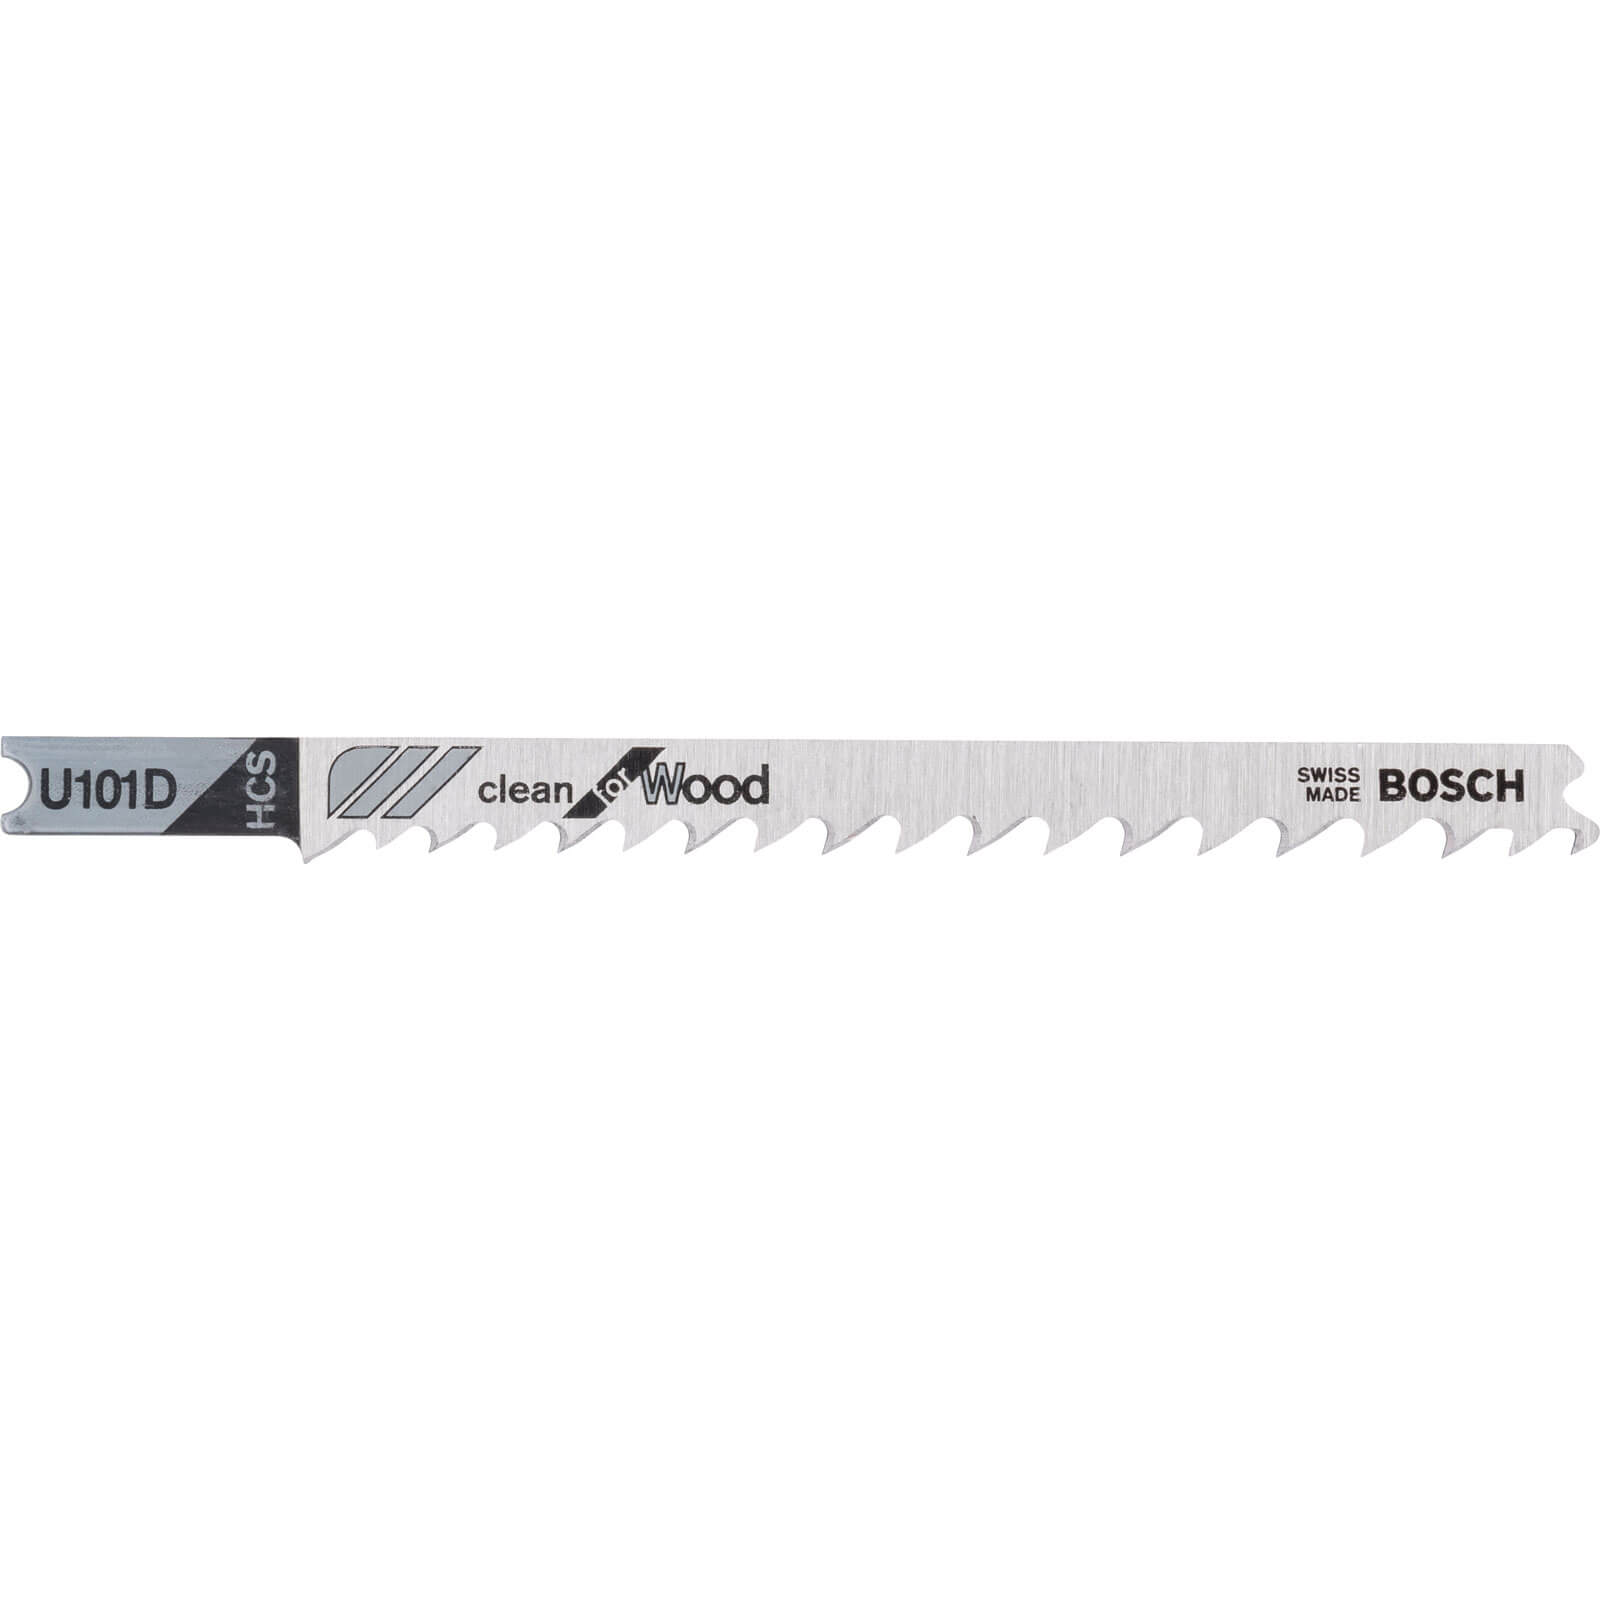 Image of Bosch U101 D Wood Cutting Jigsaw Blades Pack of 3